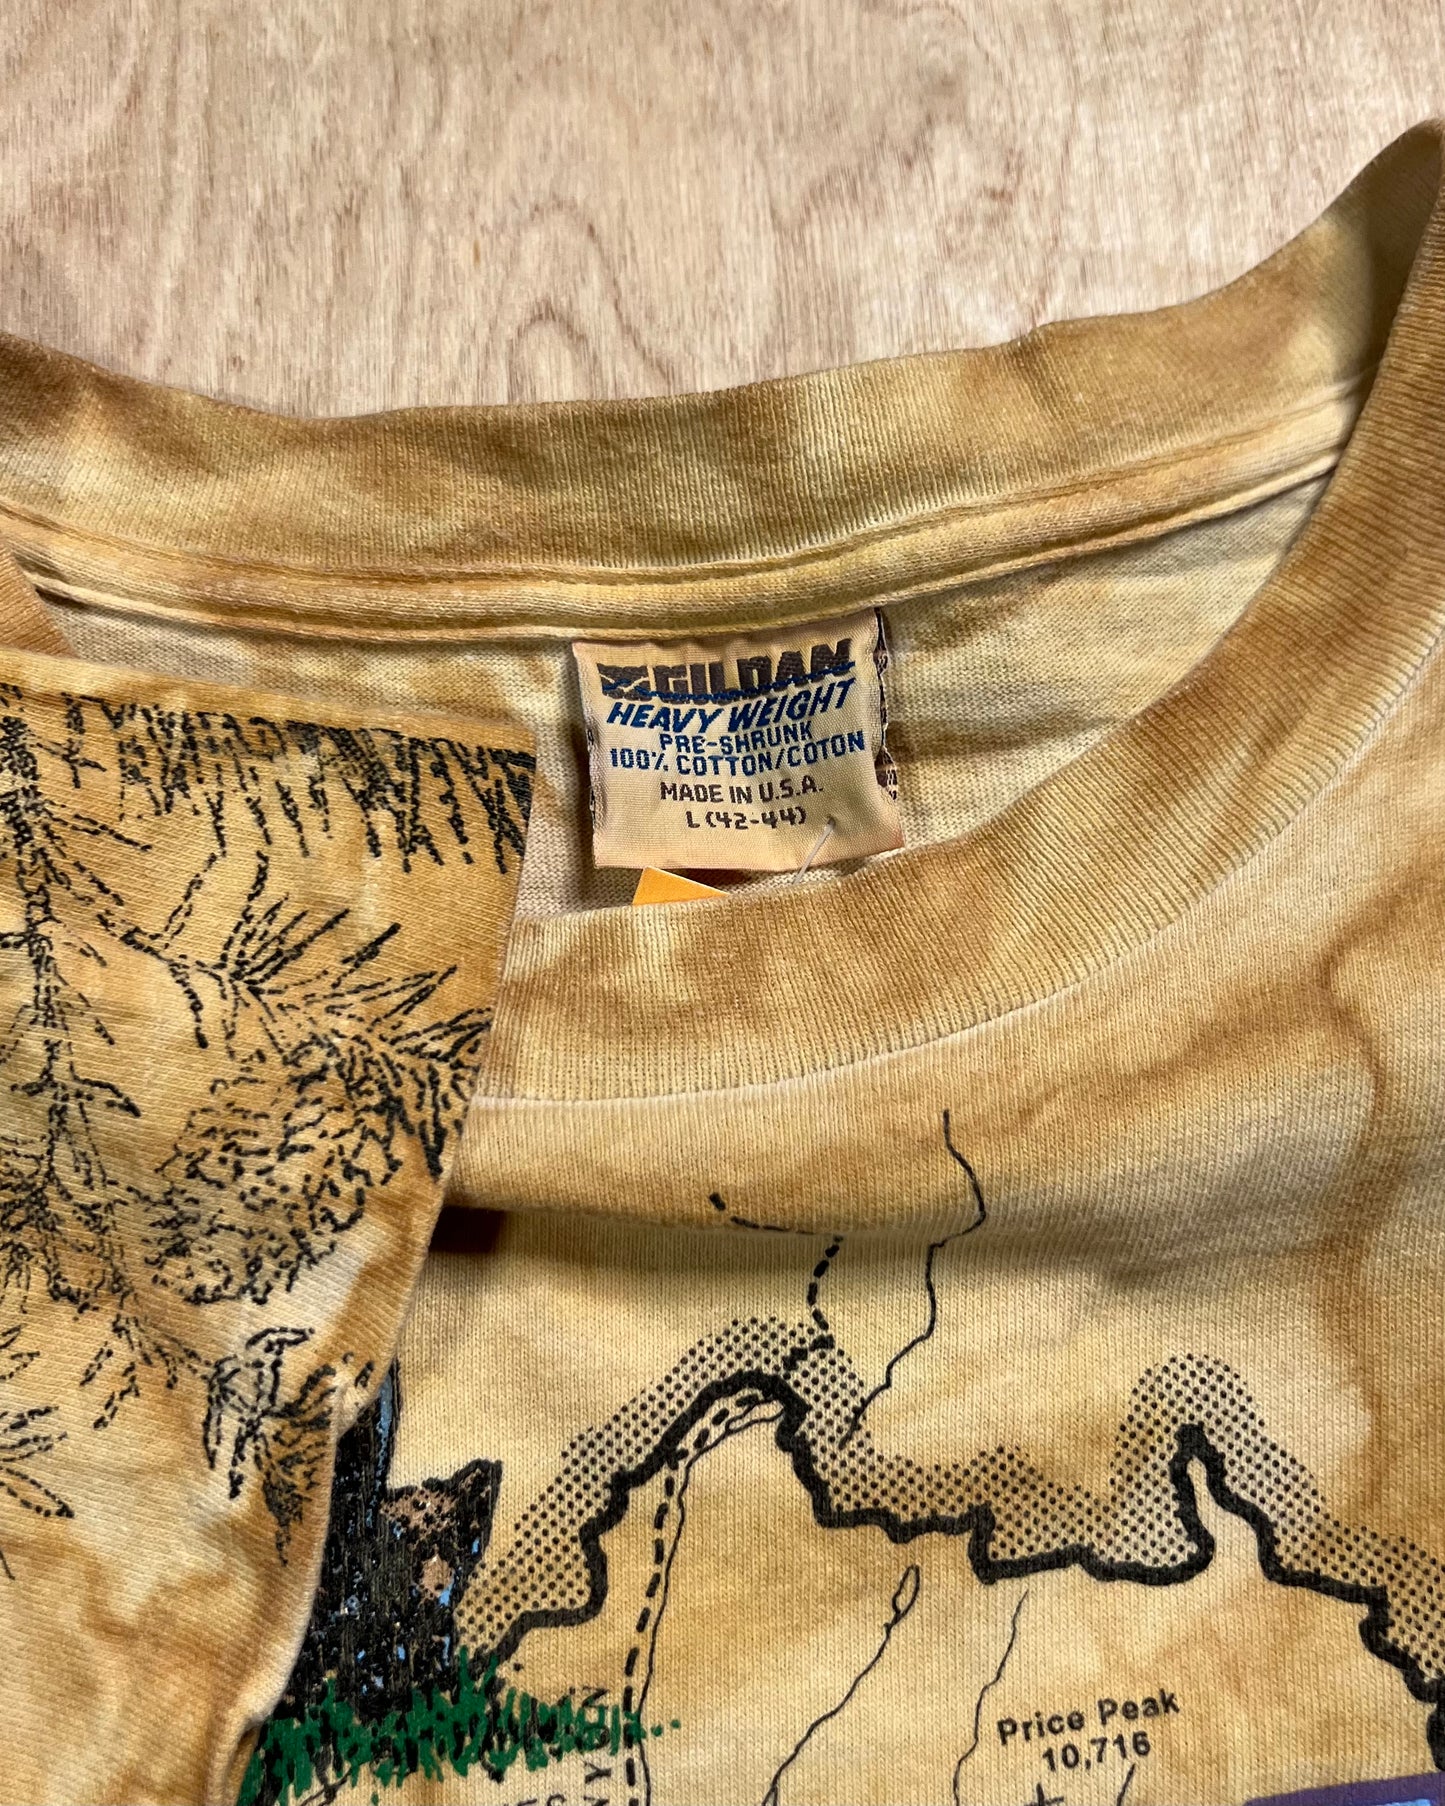 1990's Yosemite National Park AOP Single Stitch T-Shirt